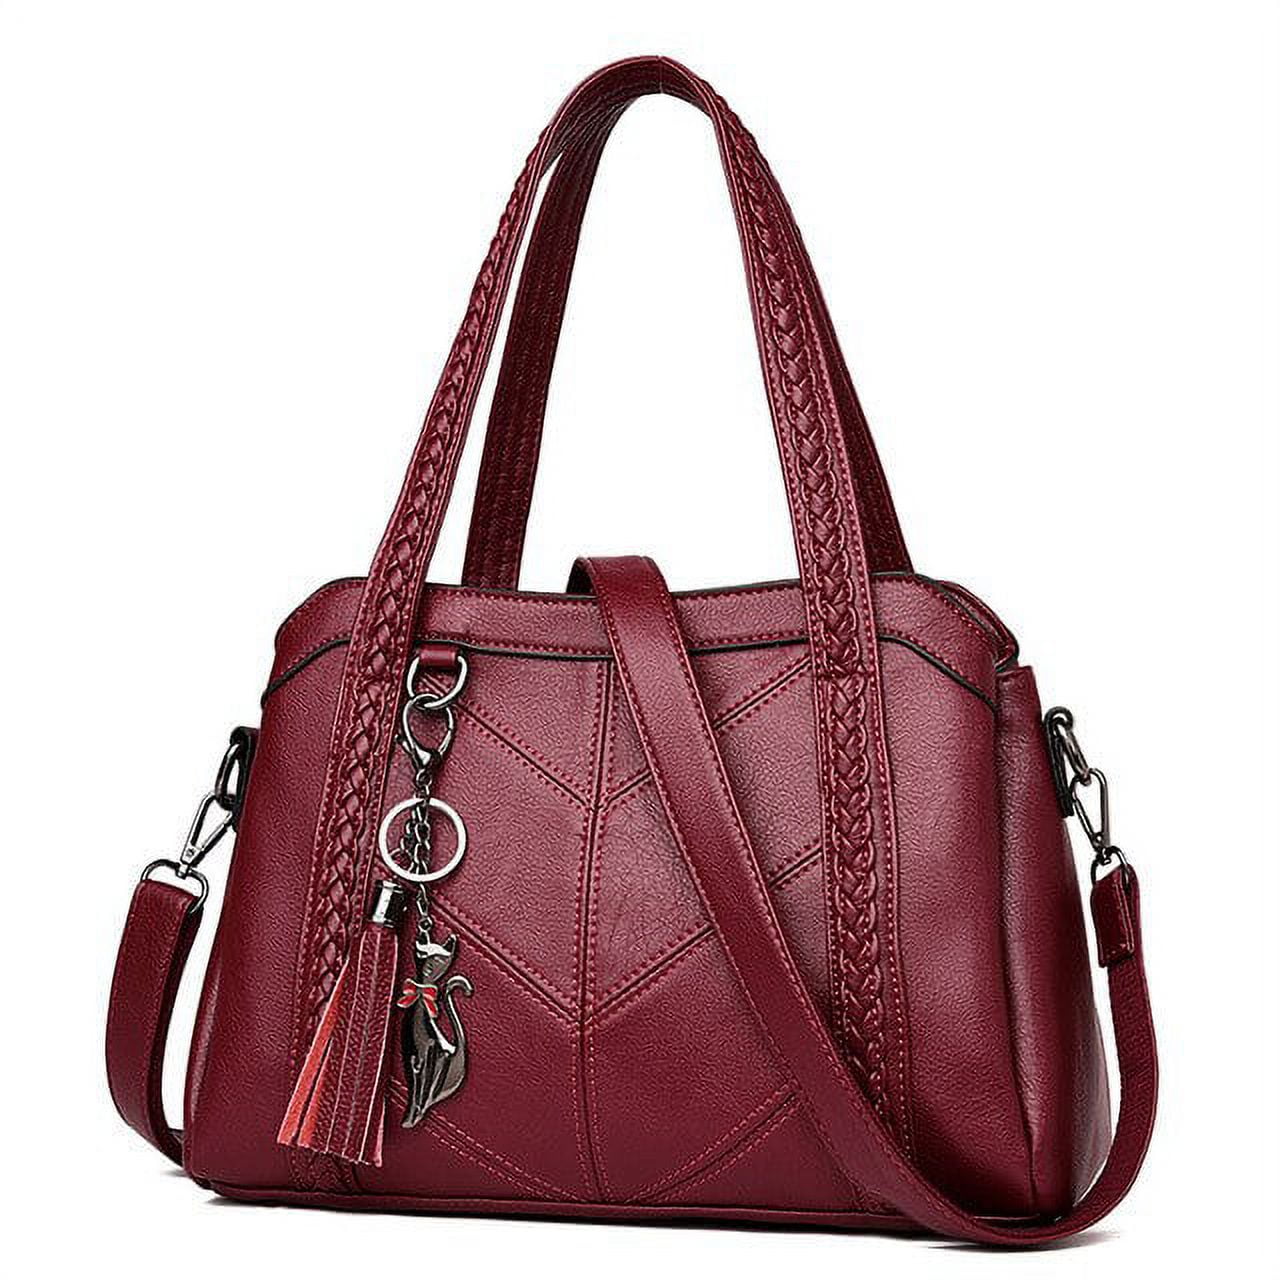 Fashion Women PU Leather Bag Large Capacity Shoulder Bags Casual Tote  Simple Top-handle HandBags,Red - Walmart.com